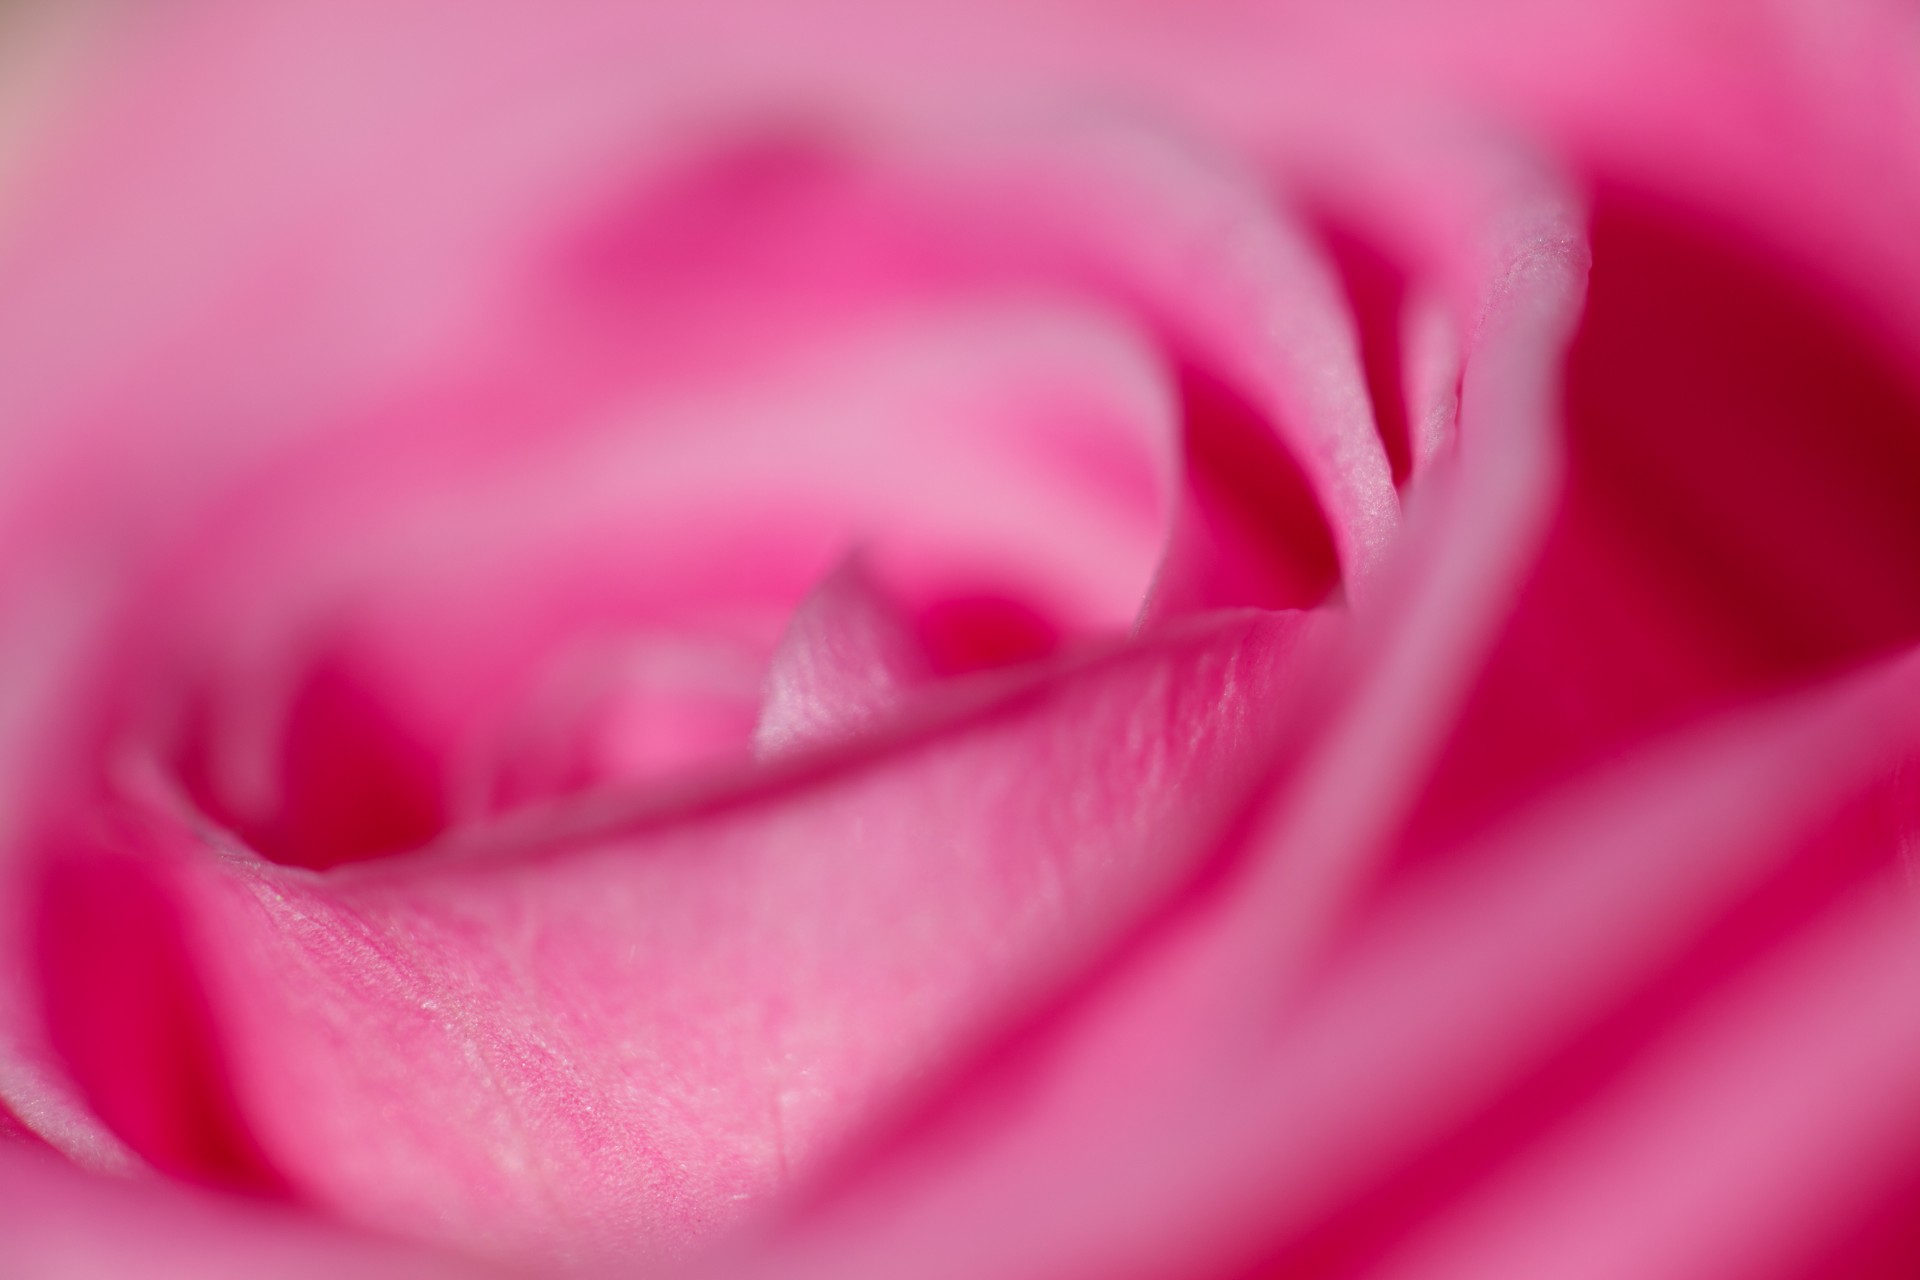 Roz petale de trandafir